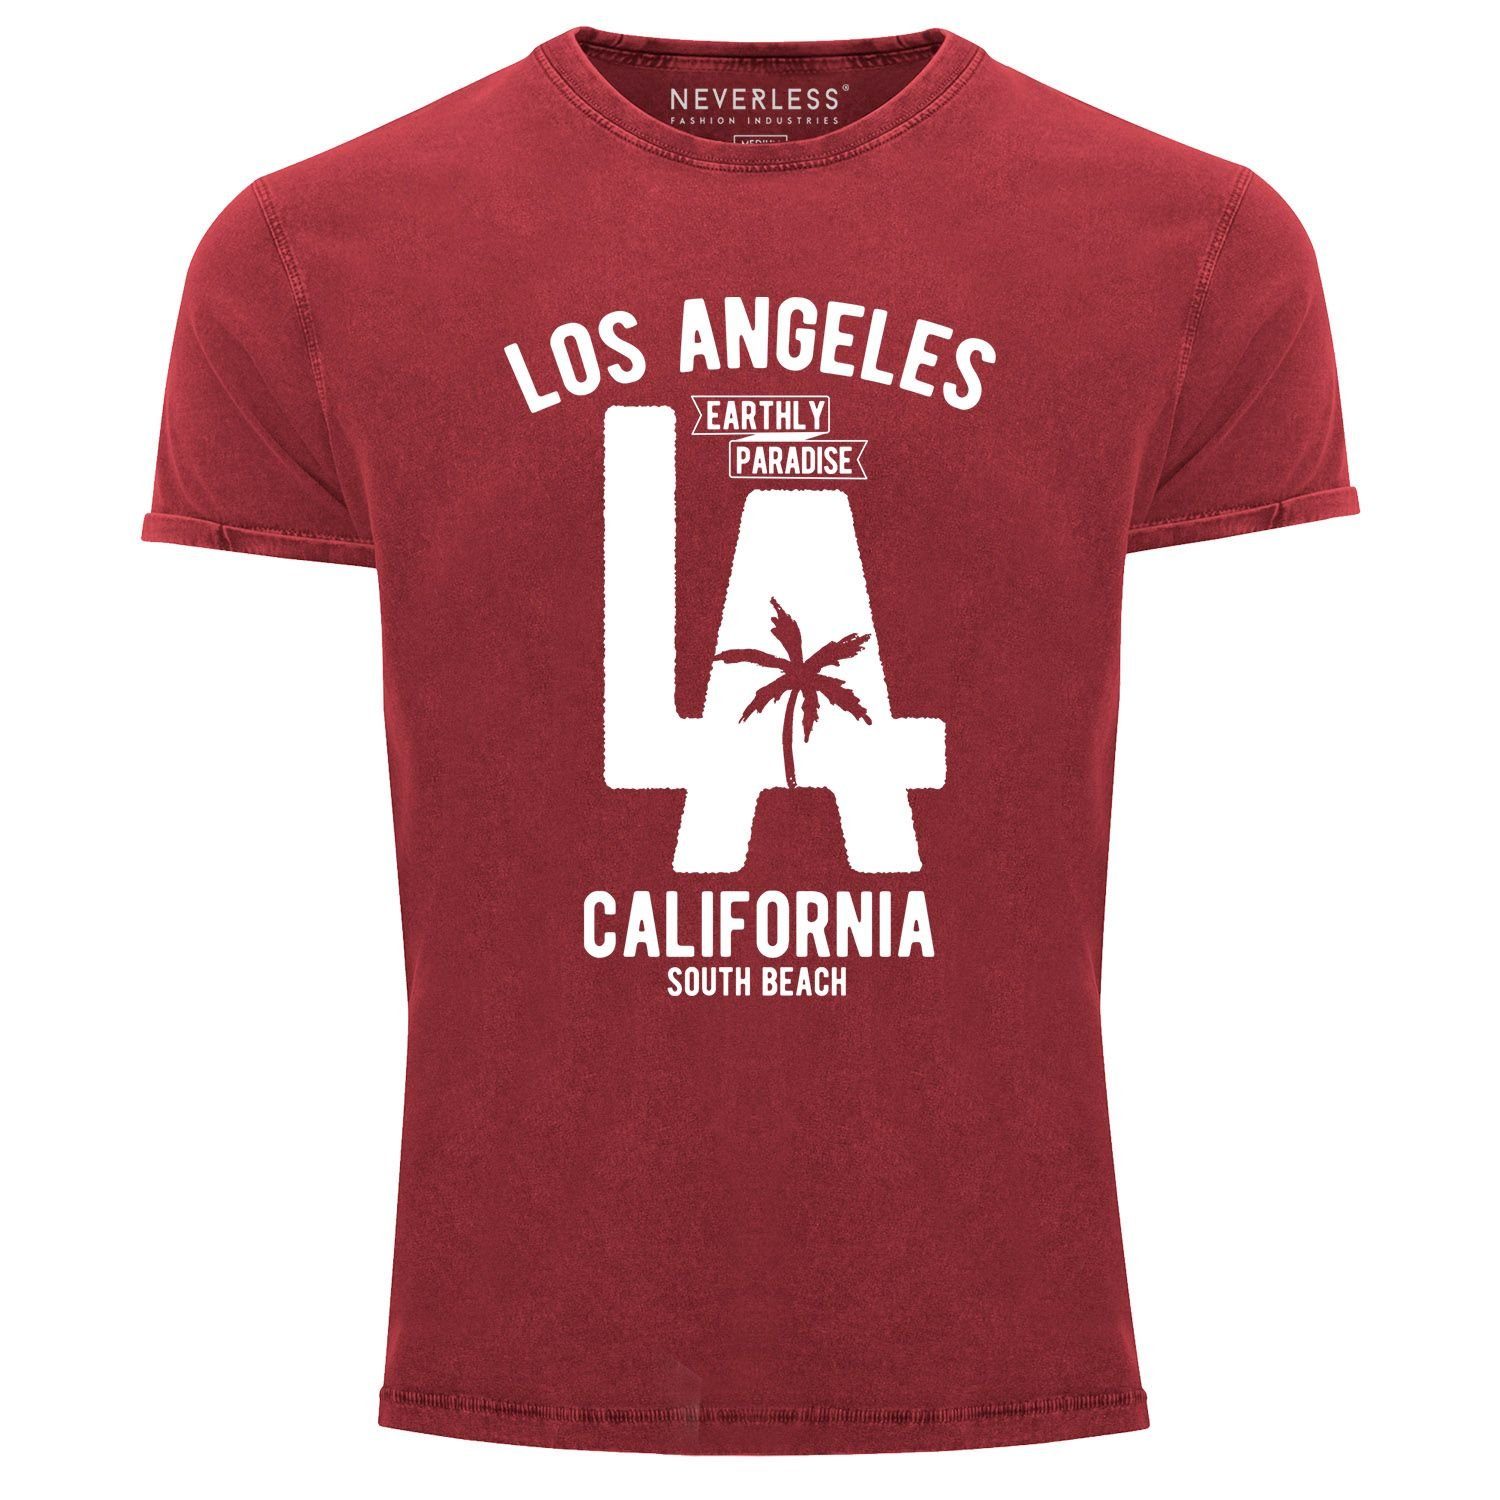 Neverless Print-Shirt Cooles Angesagtes Herren T-Shirt Vintage Shirt LA Los Angeles California Aufdruck Used Look Slim Fit Neverless® mit Print rot